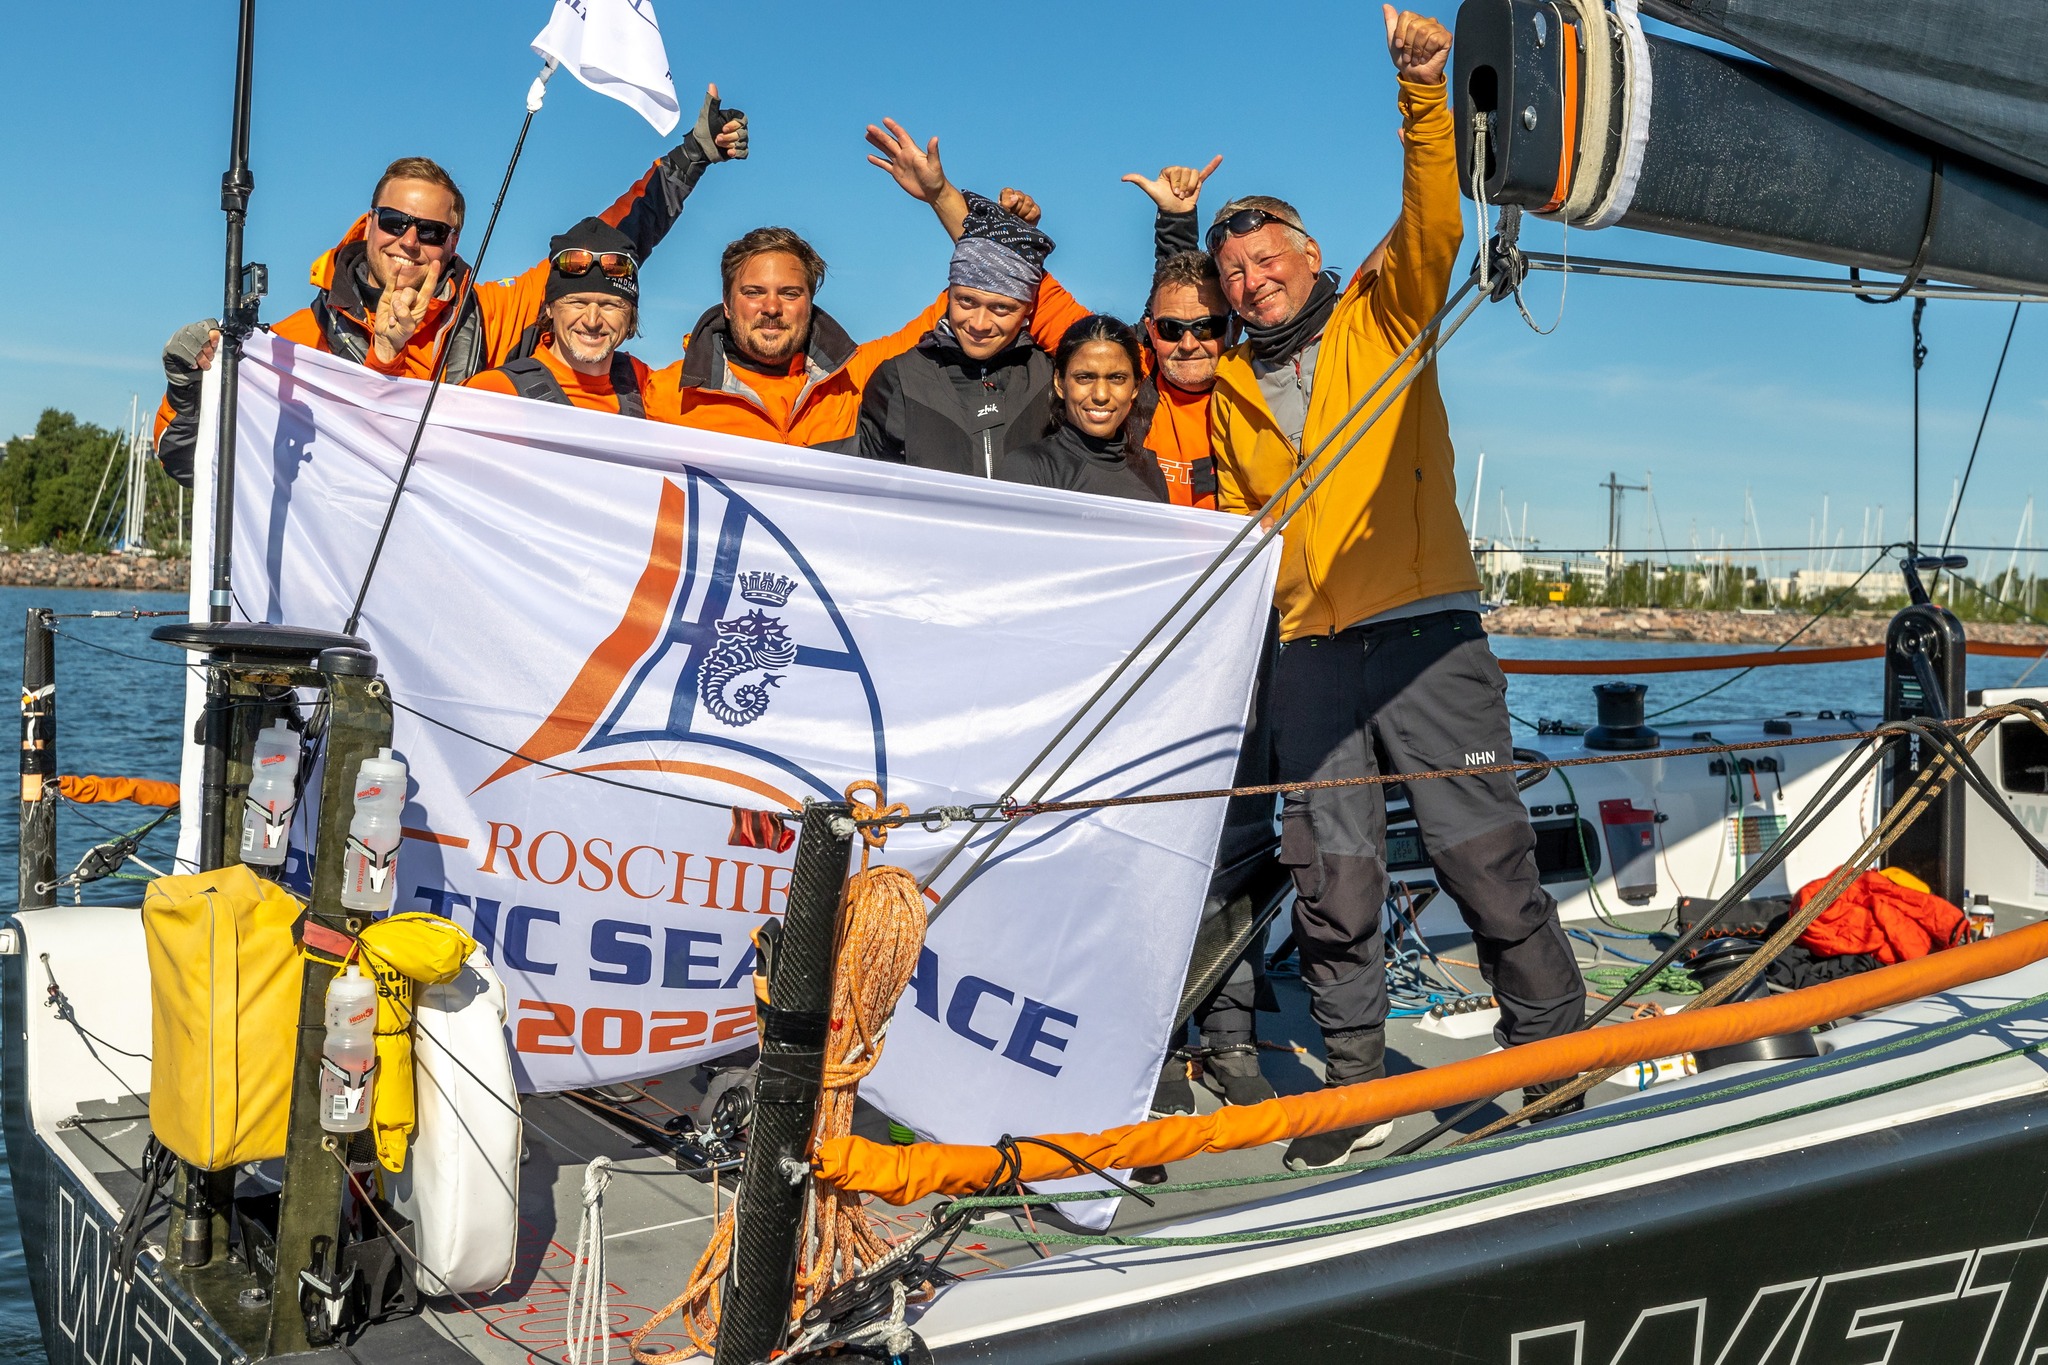 Wetjob vinner IRC1 i RORC Roschier Baltic Sea Race